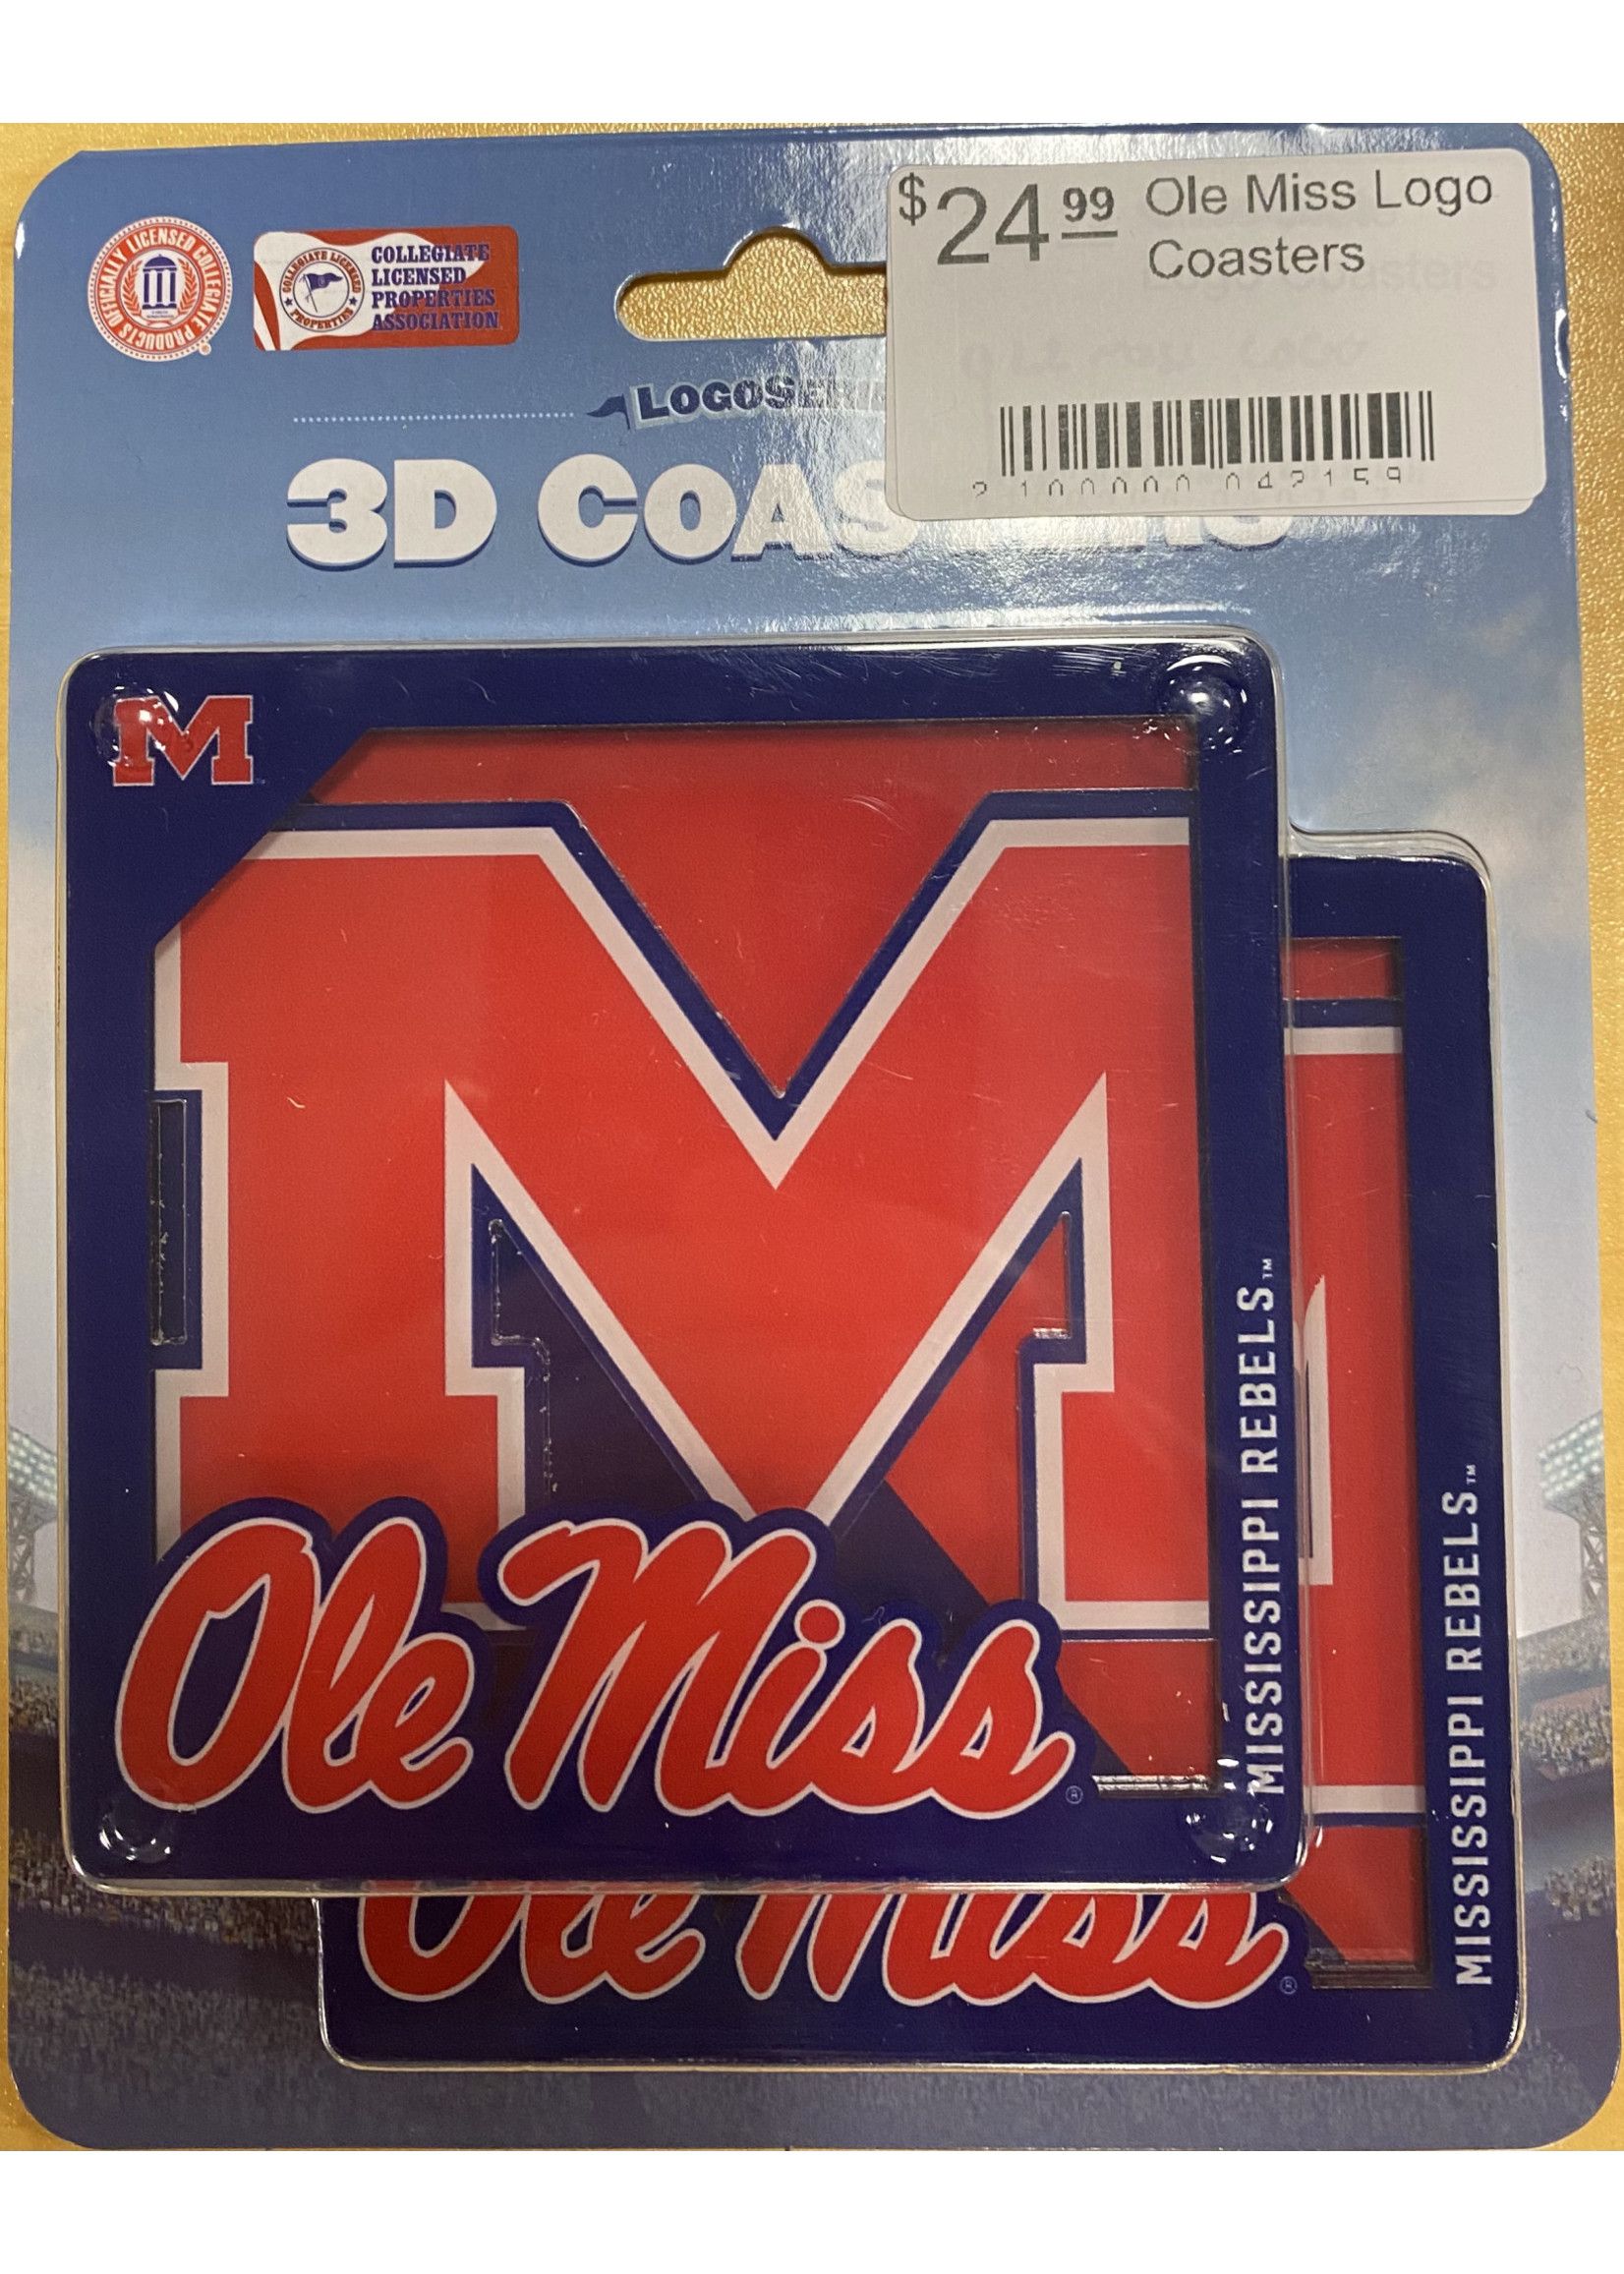 Ole Miss Logo Coasters